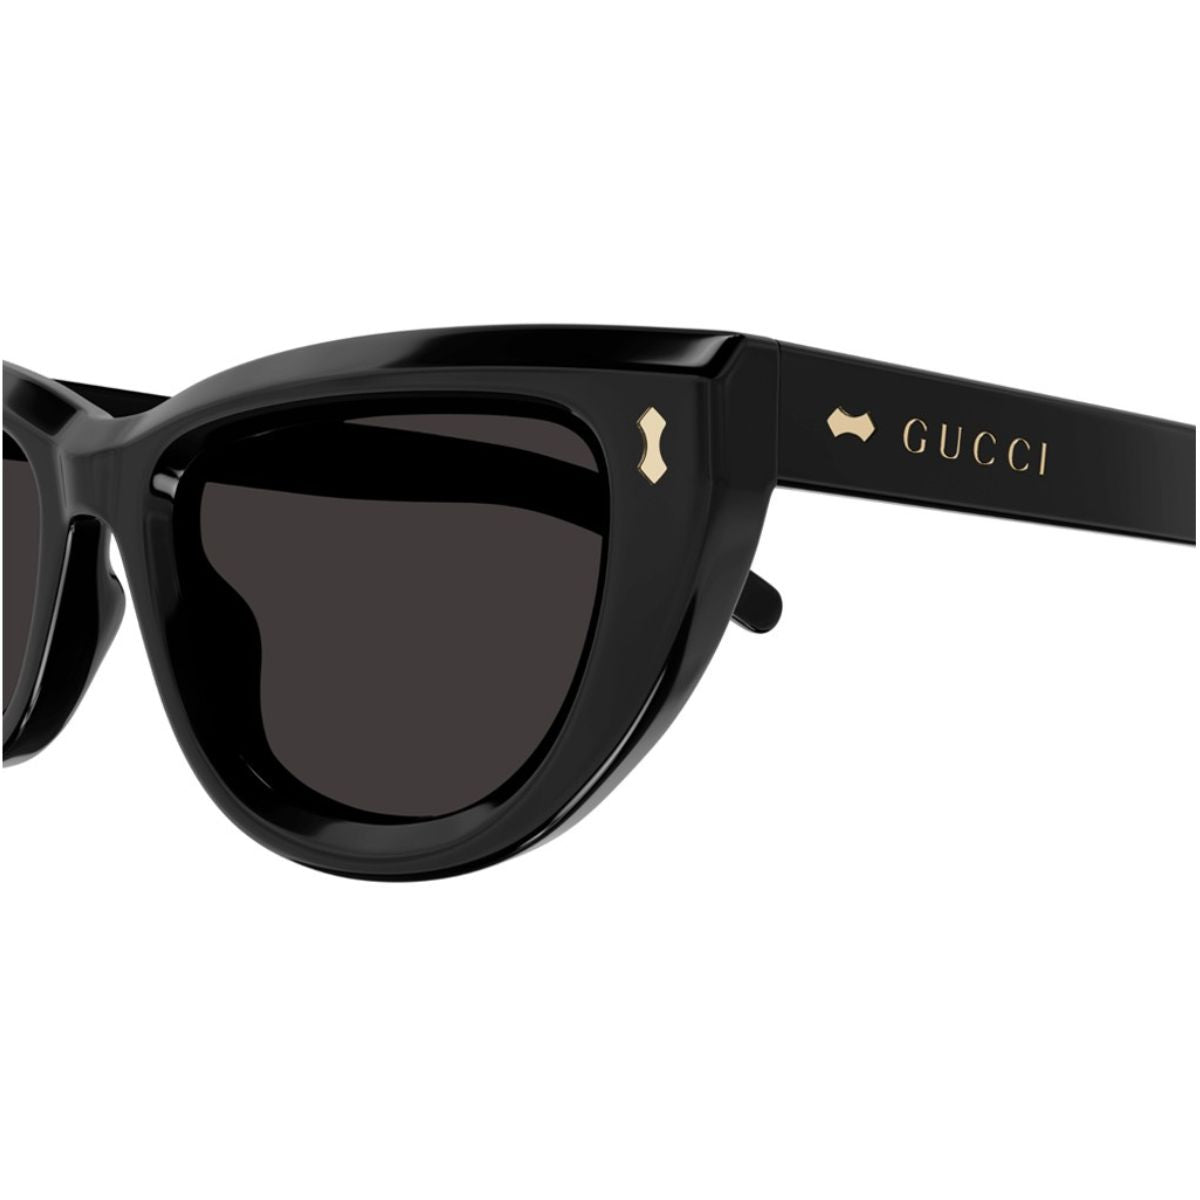  "Optorium: Your Destination for Gucci 1521S 001 Sunglasses for Women"